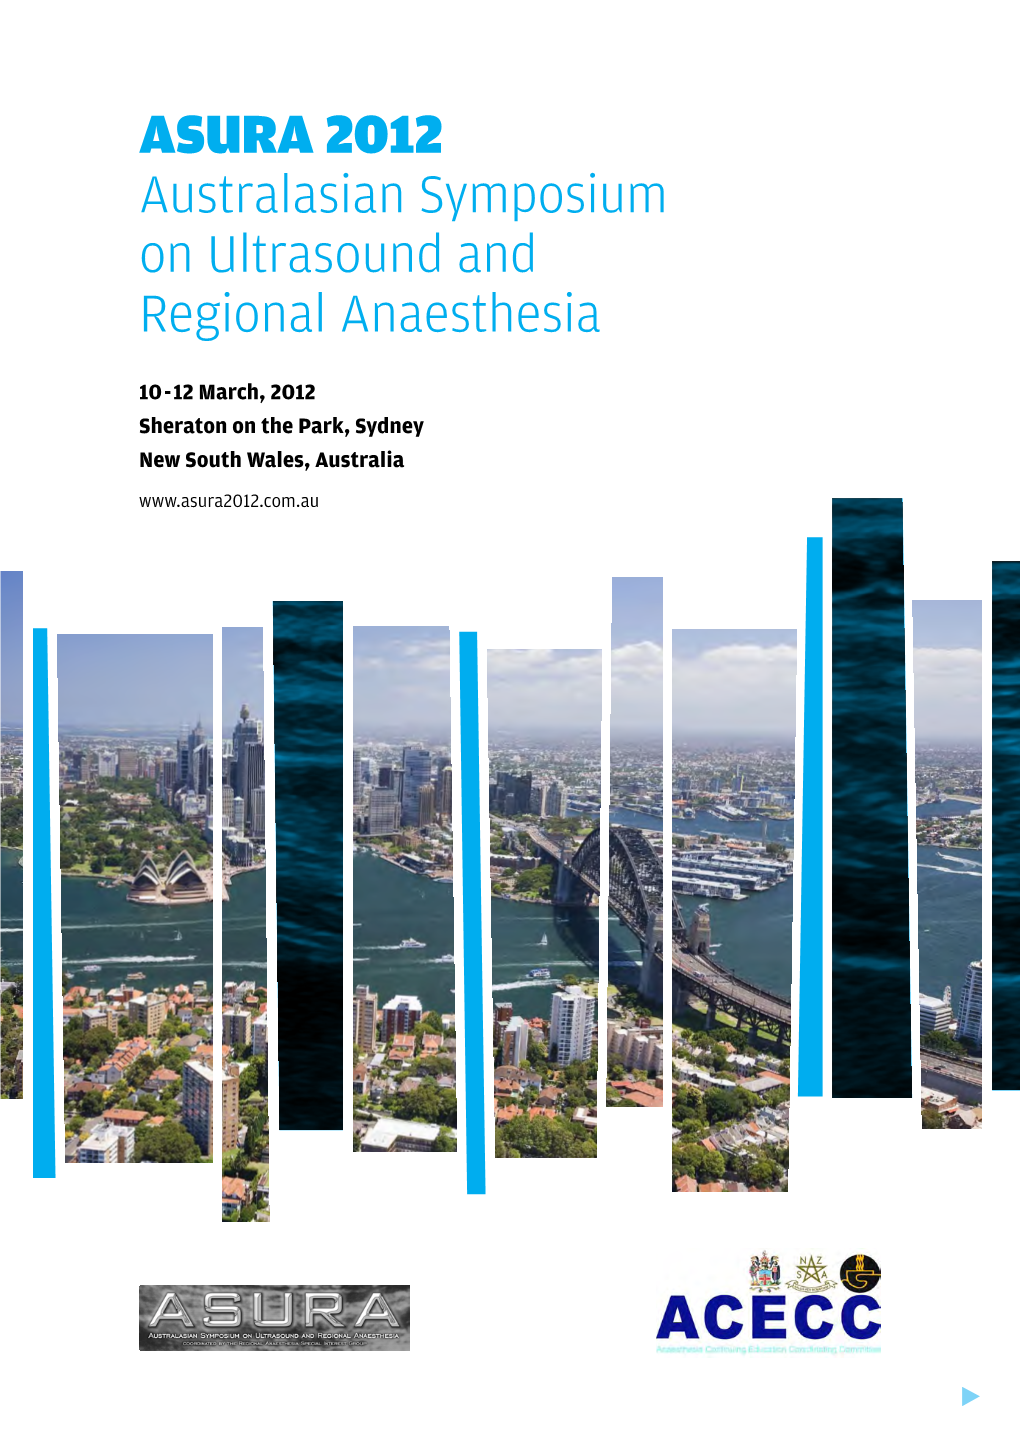 ASURA 2012 Australasian Symposium on Ultrasound and Regional Anaesthesia